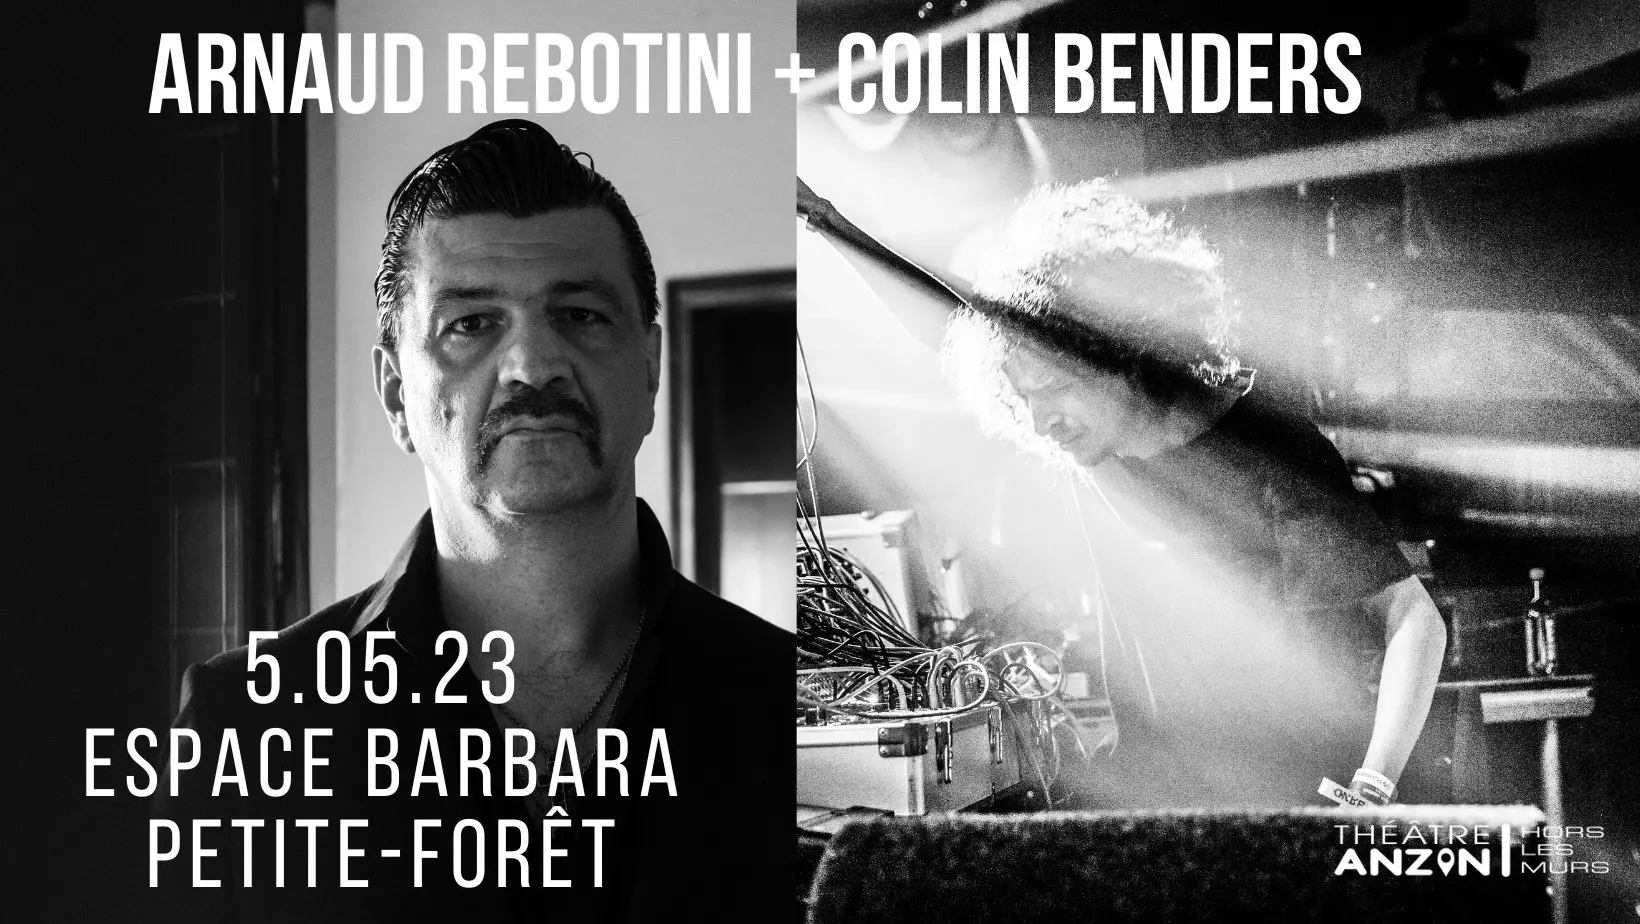 Concerts-ARNAUD REBOTINI + COLIN BENDERS + Encore